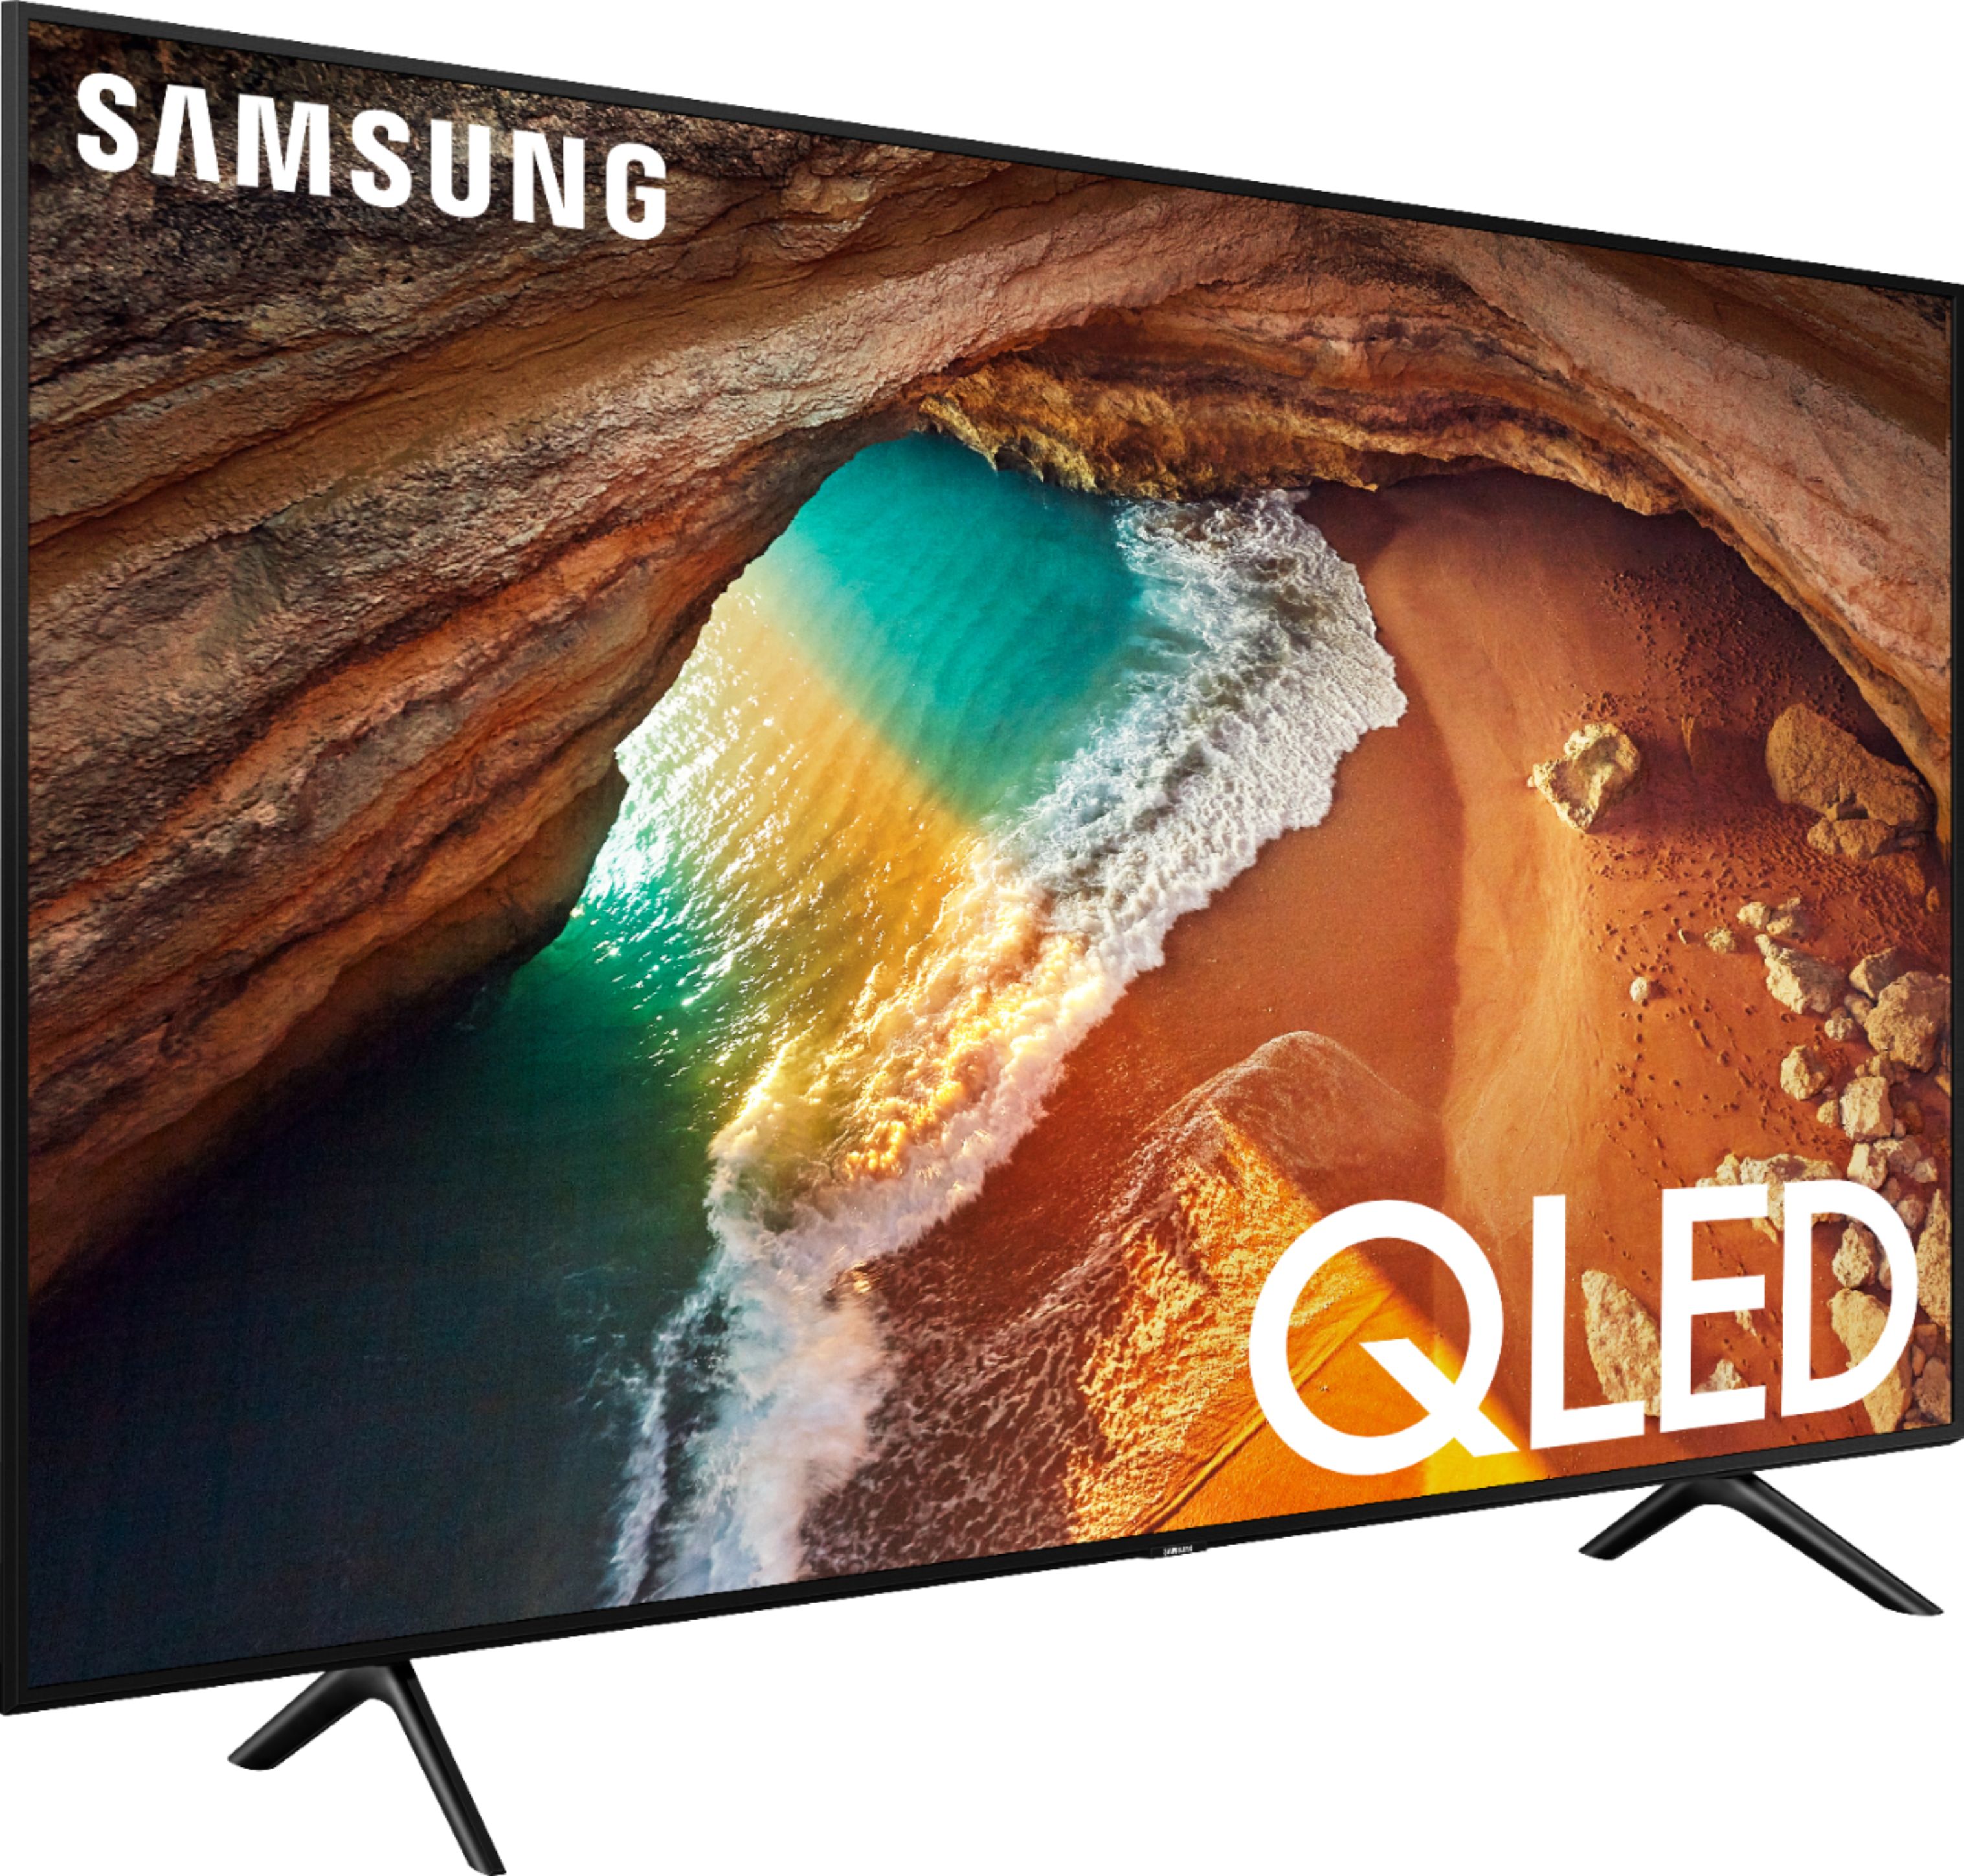 Angle View: Samsung - 65" Class Q60 Series LED 4K UHD Smart Tizen TV